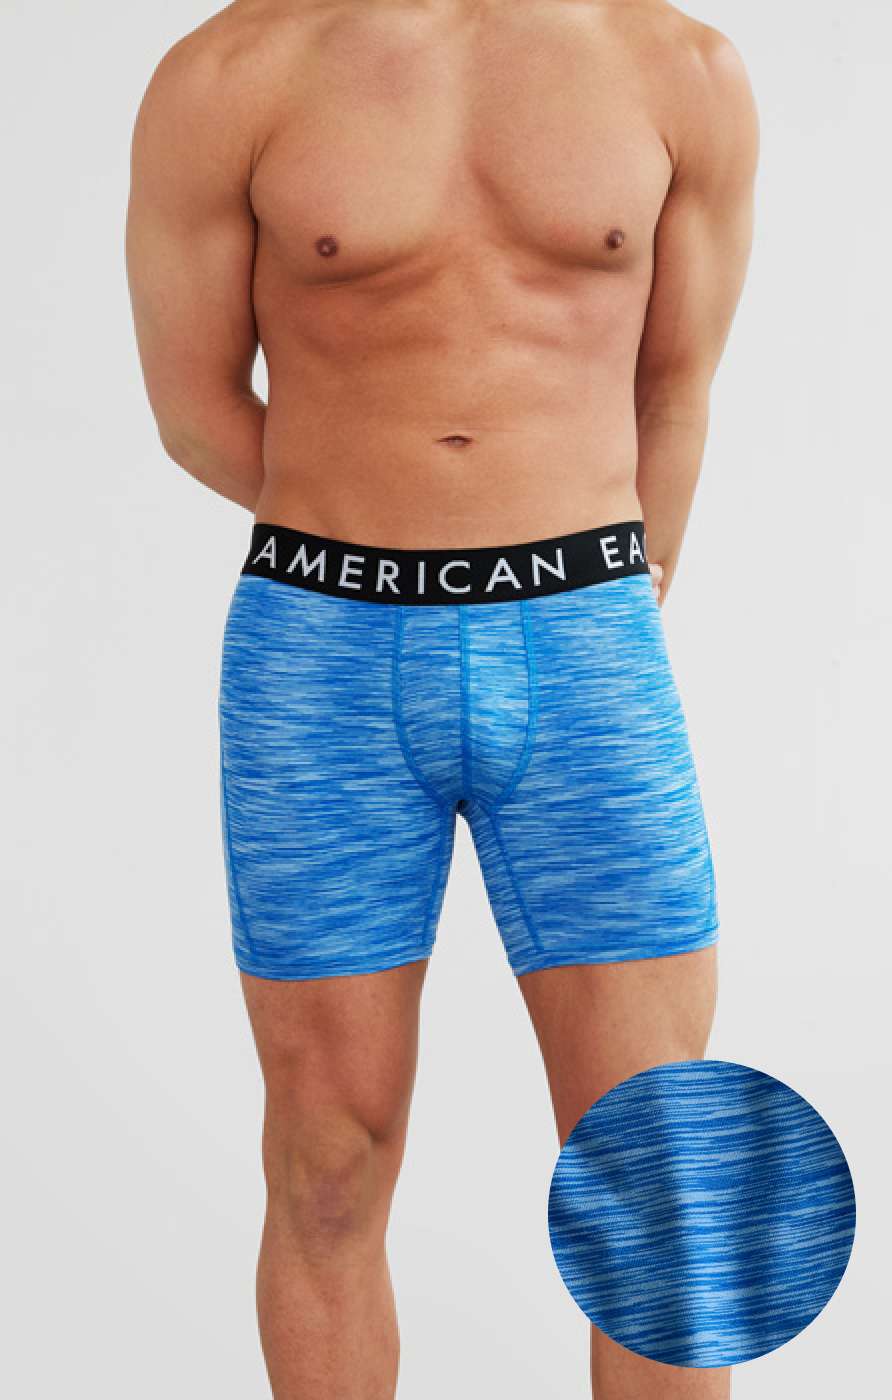 NEW 3 PK American Eagle Mens Boxer Brief Trunks Underwear 6 inseam S M L  XL - Helia Beer Co